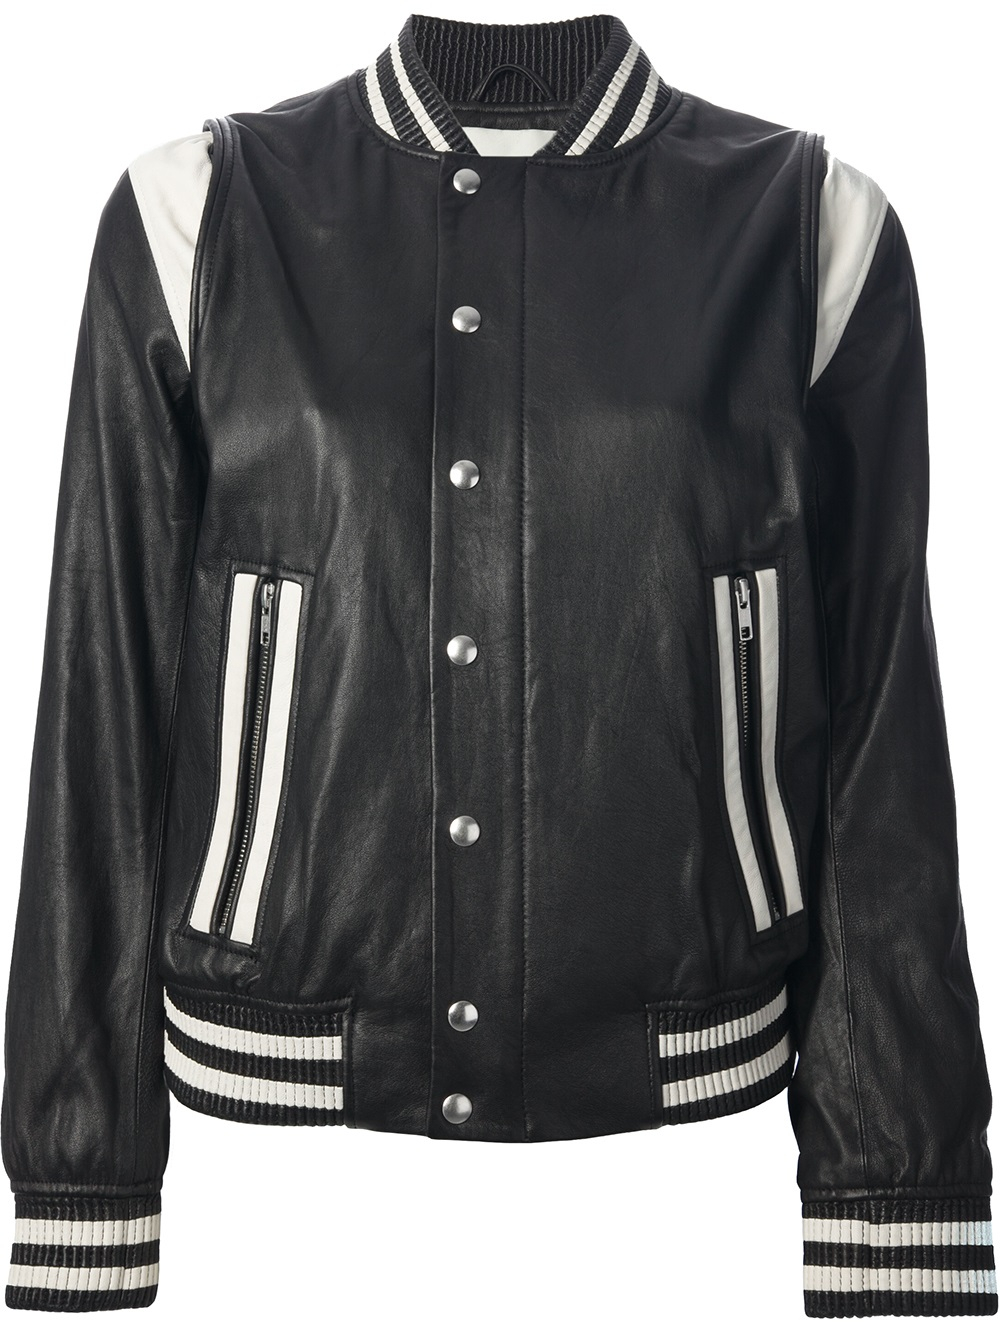 Lyst - Iro Contrast Trim Varsity Jacket in Black